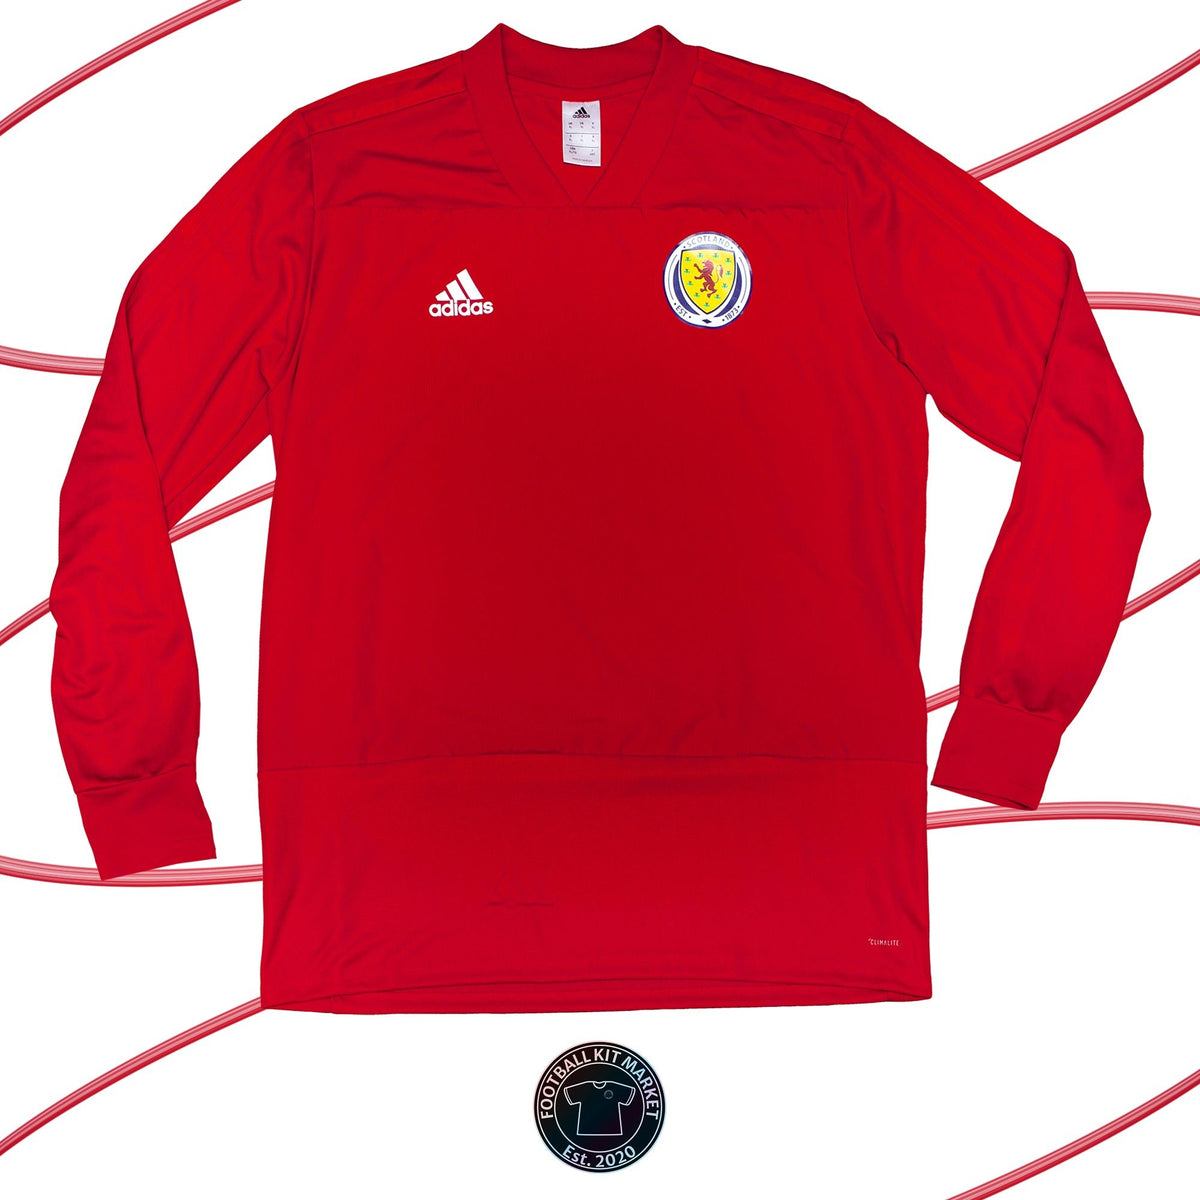 Genuine SCOTLAND Training Top (2018) - ADIDAS (XL) - Product Image from Football Kit Market